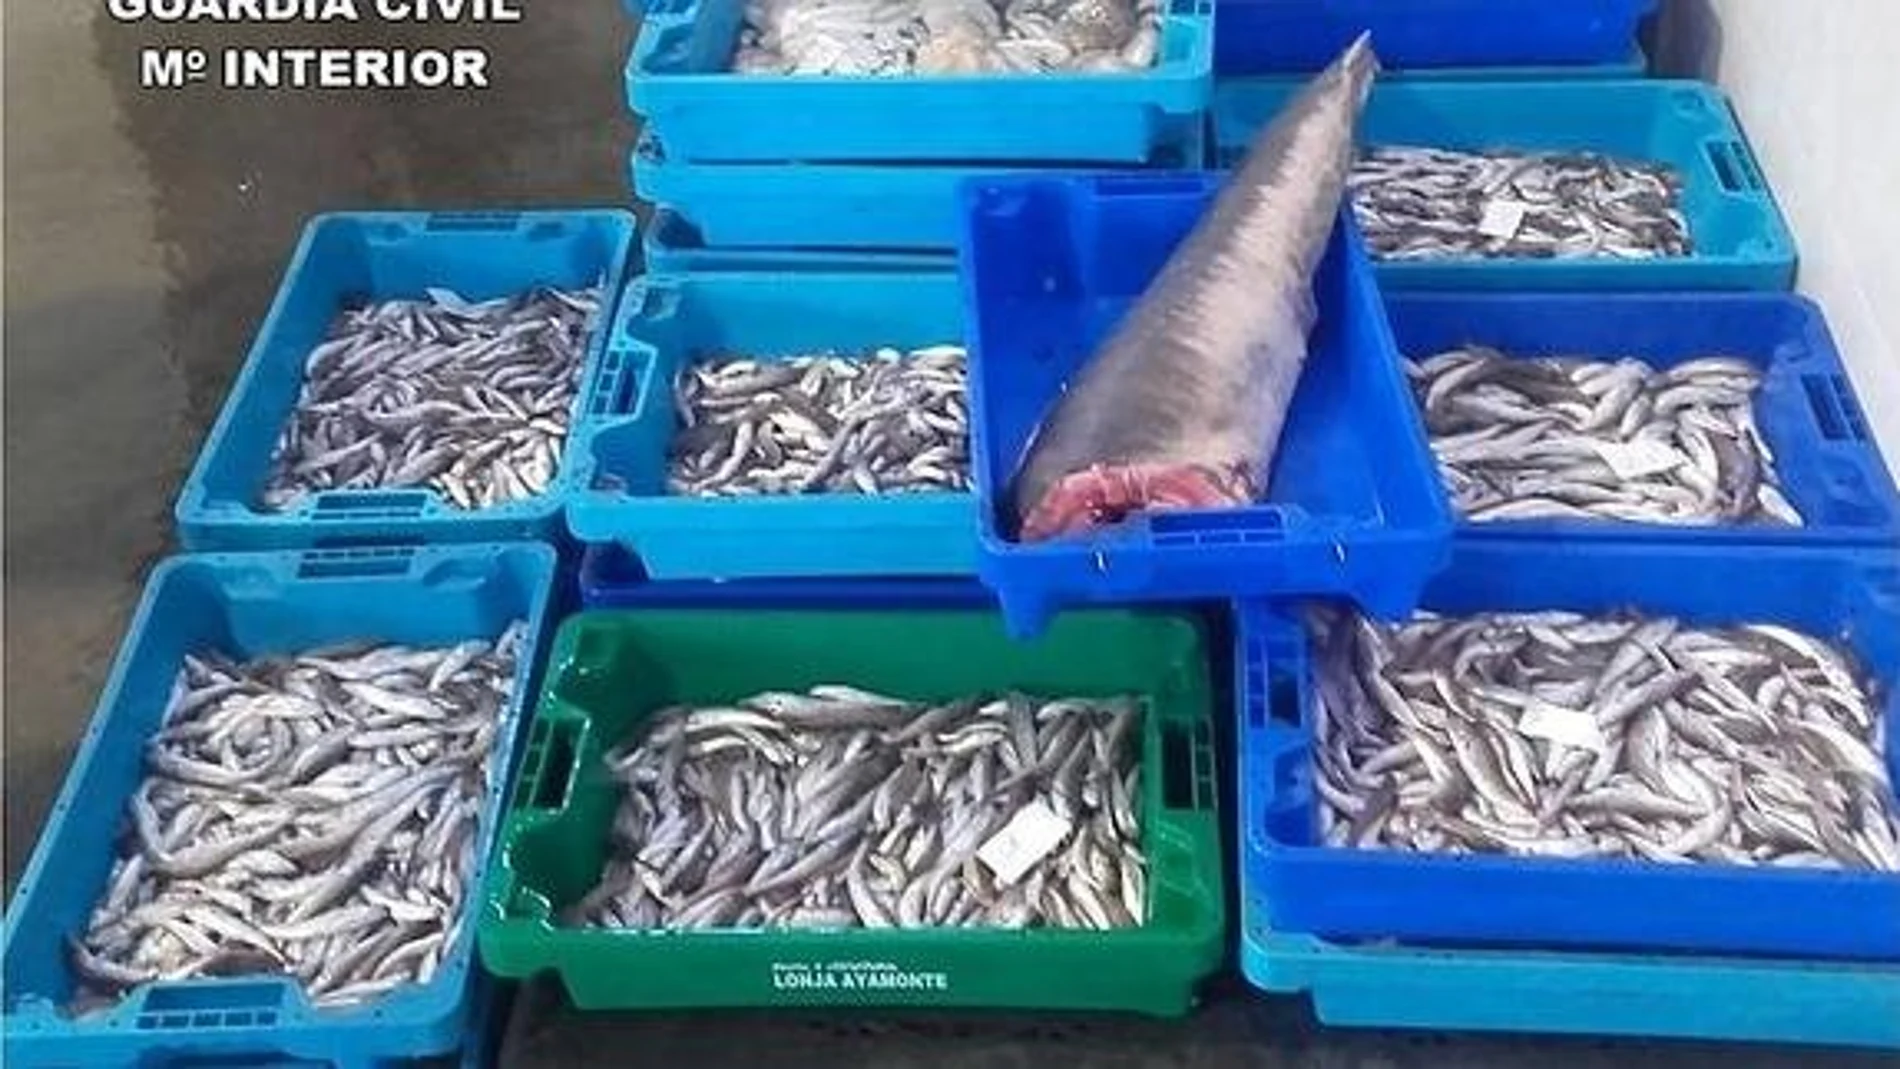 La Guardia Civil interviene una tonelada de pescado ilegal